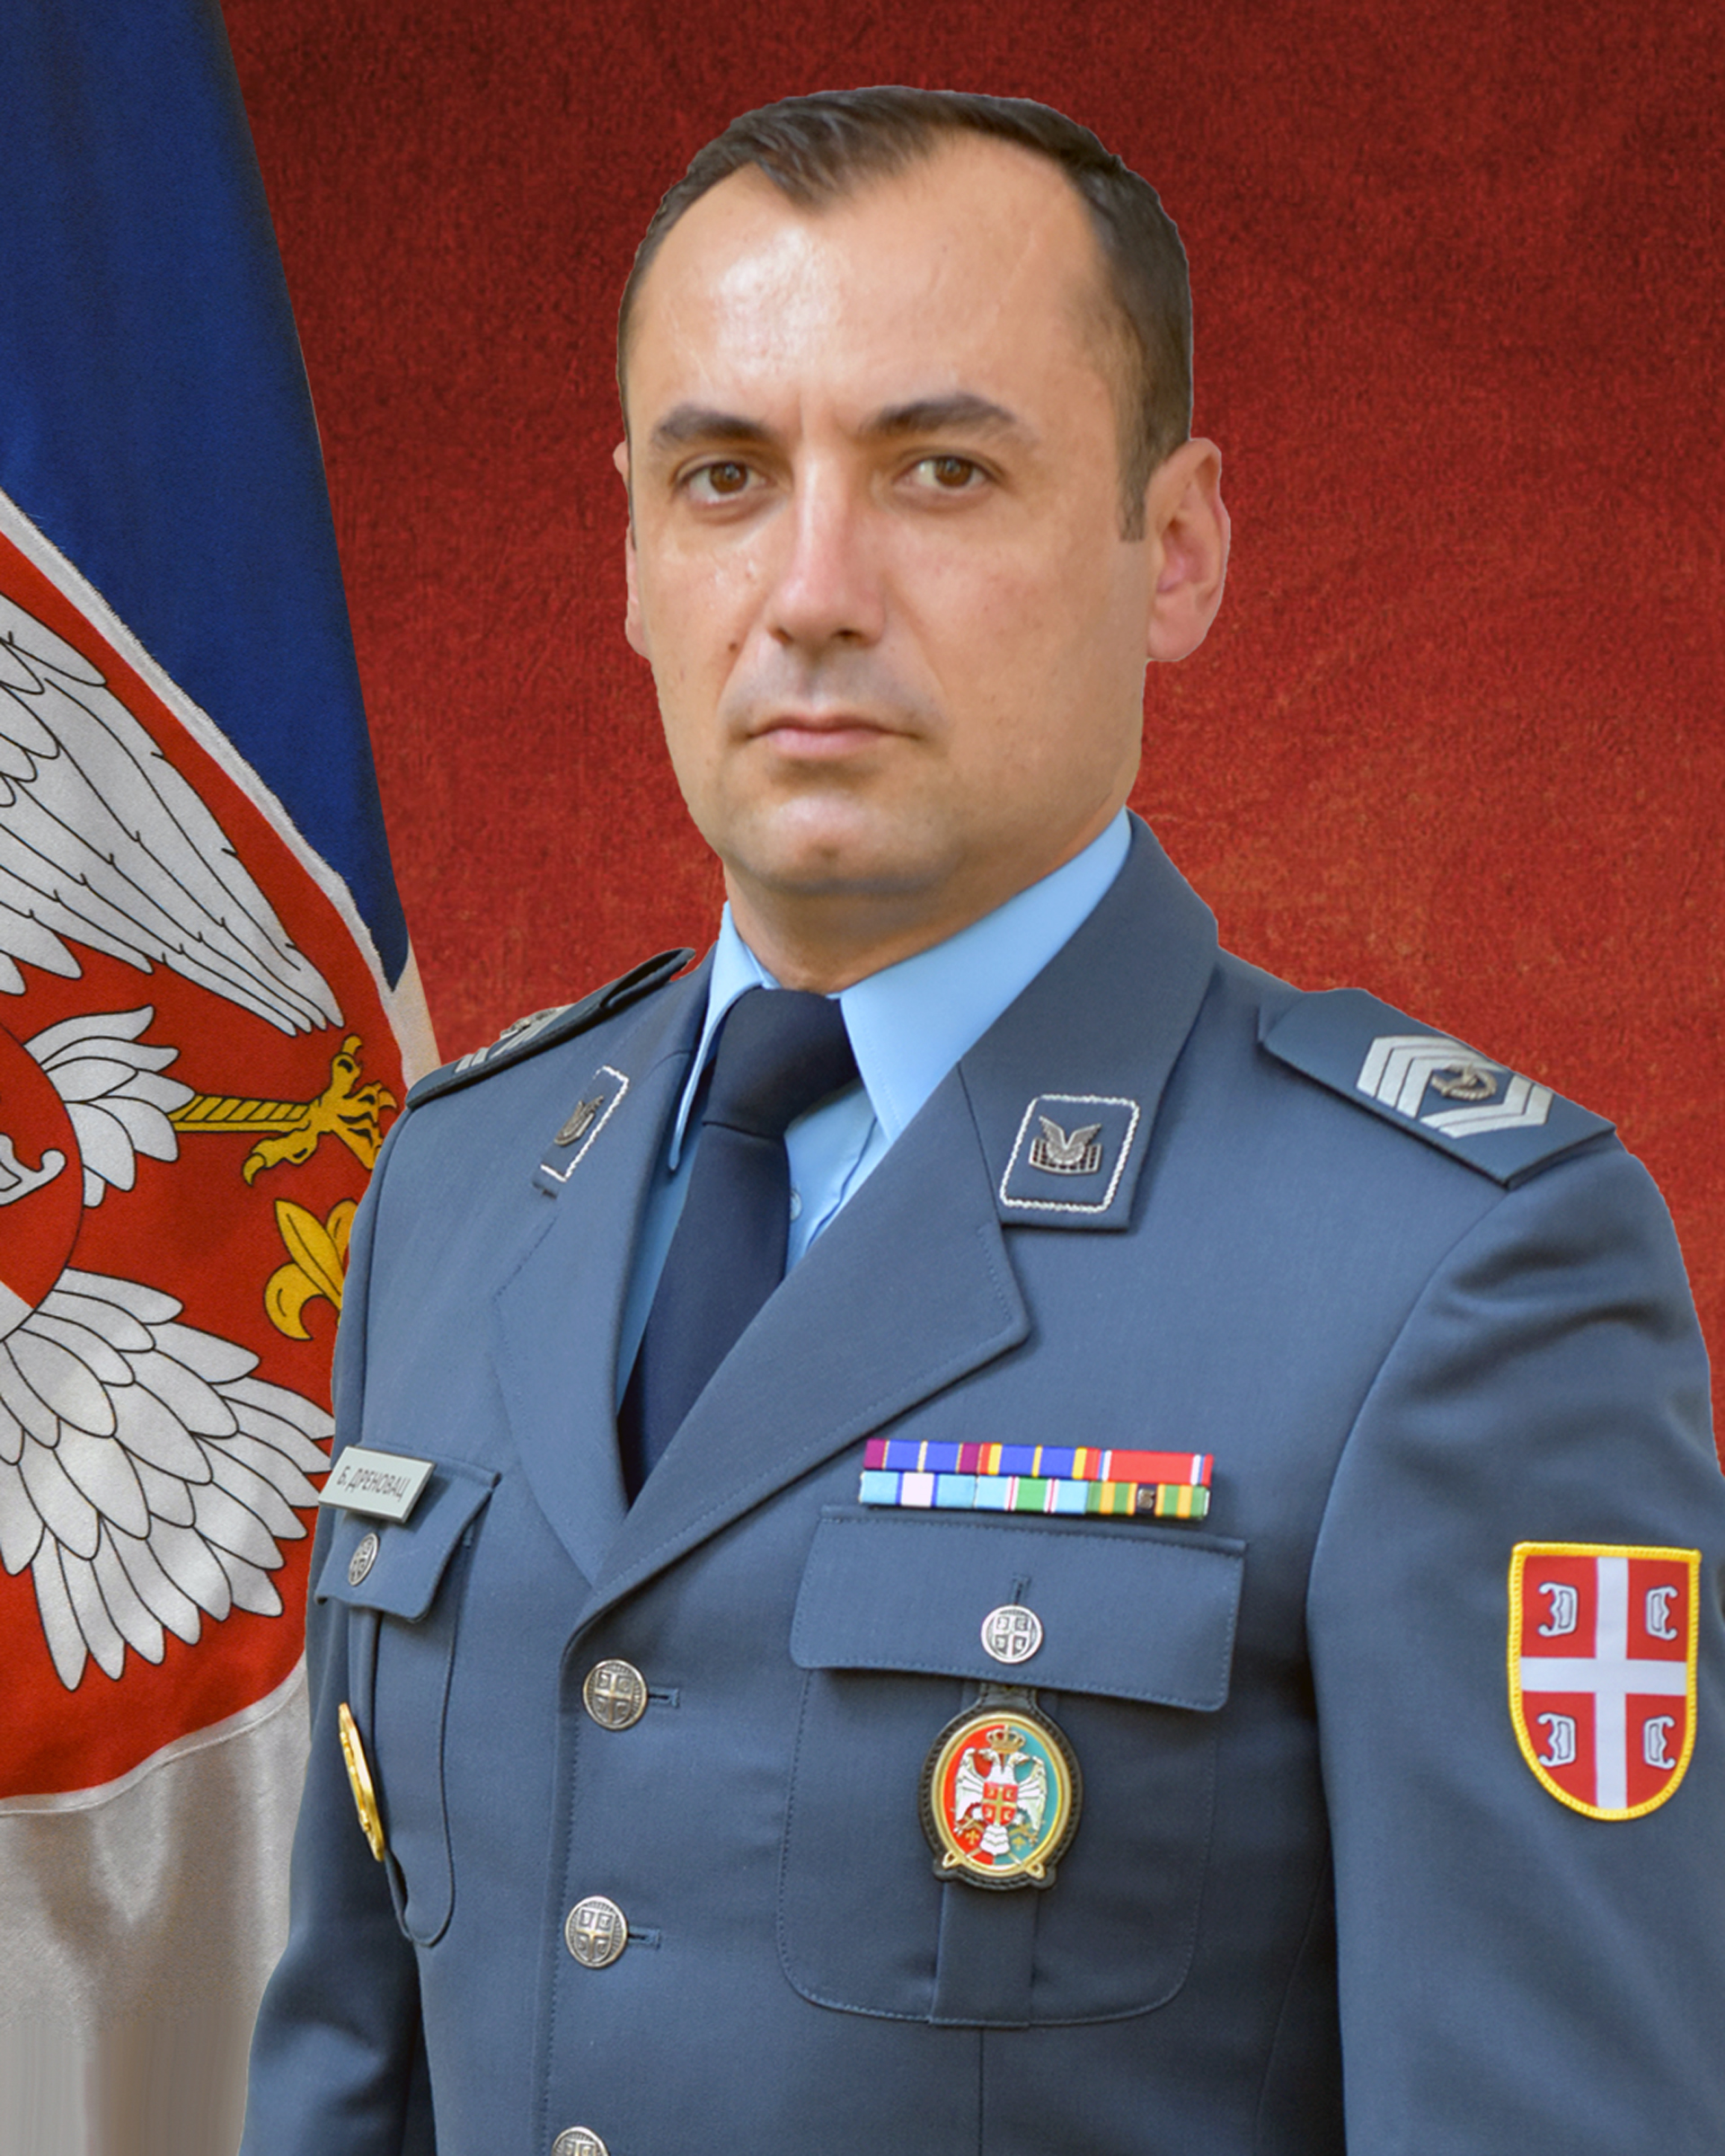 Sergeant Major Bratislav Drenovac